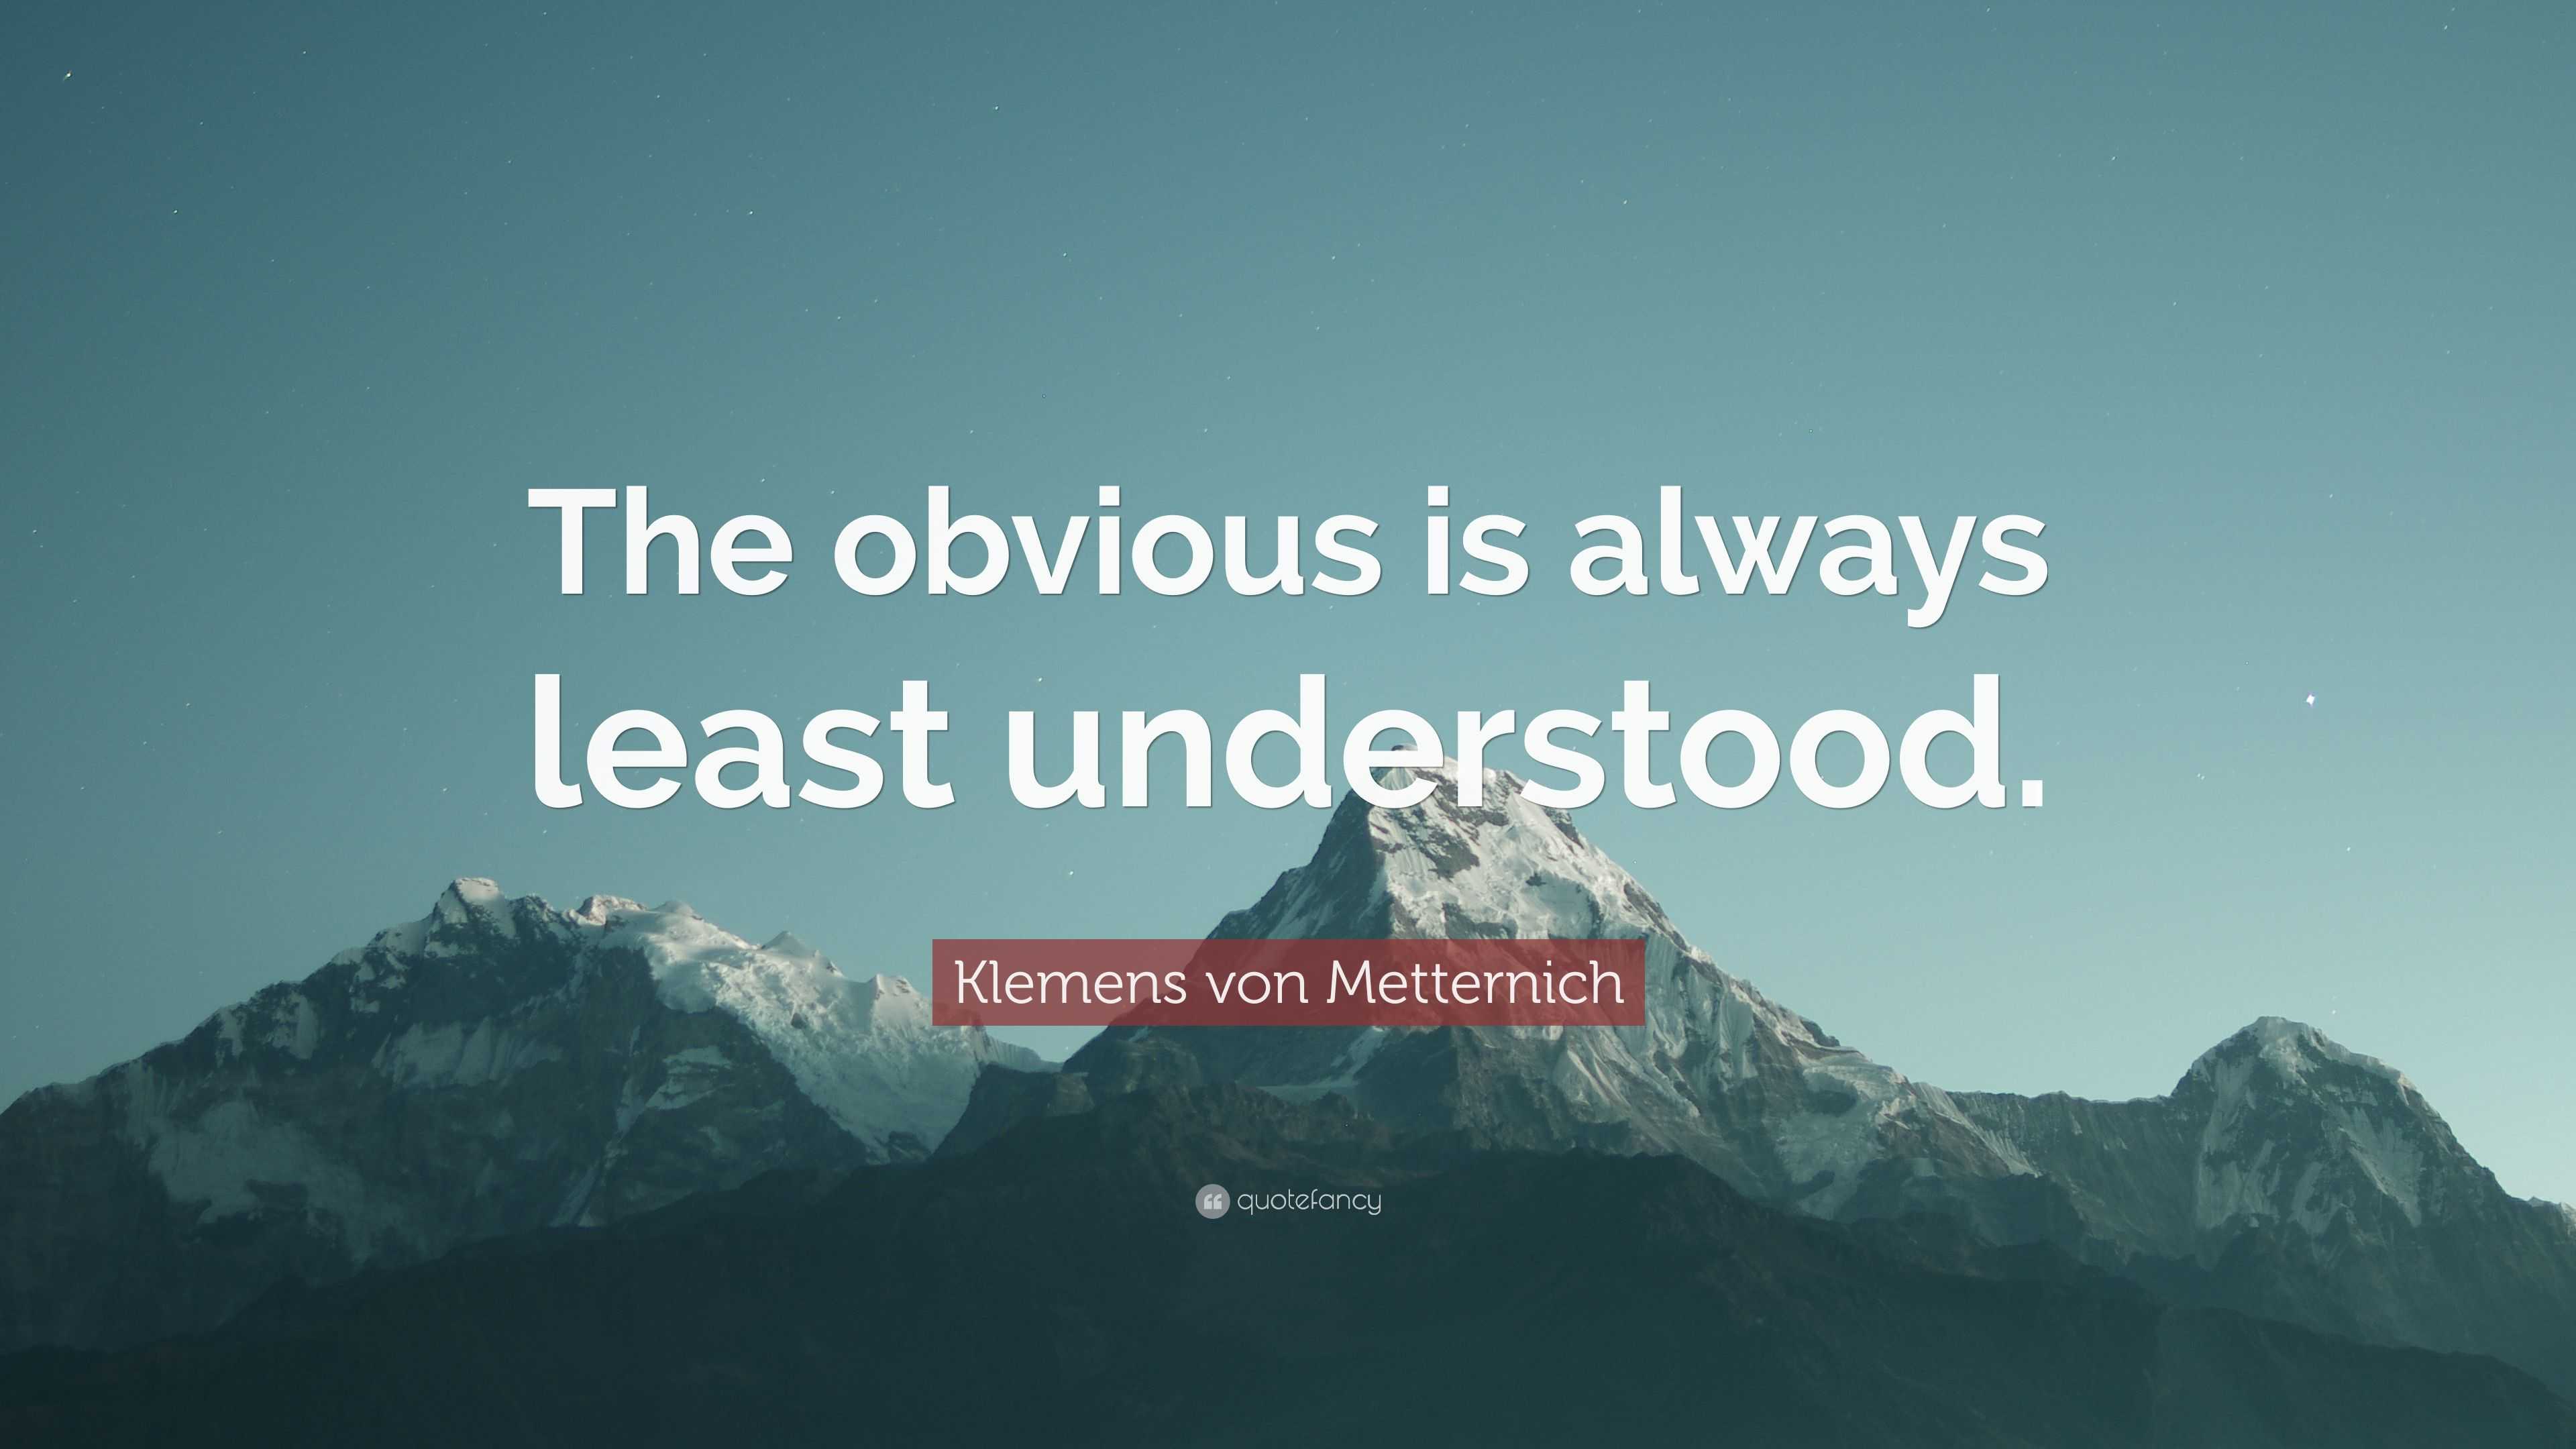 Klemens von Metternich Quote: "The obvious is always least understood." (9 wallpapers) - Quotefancy